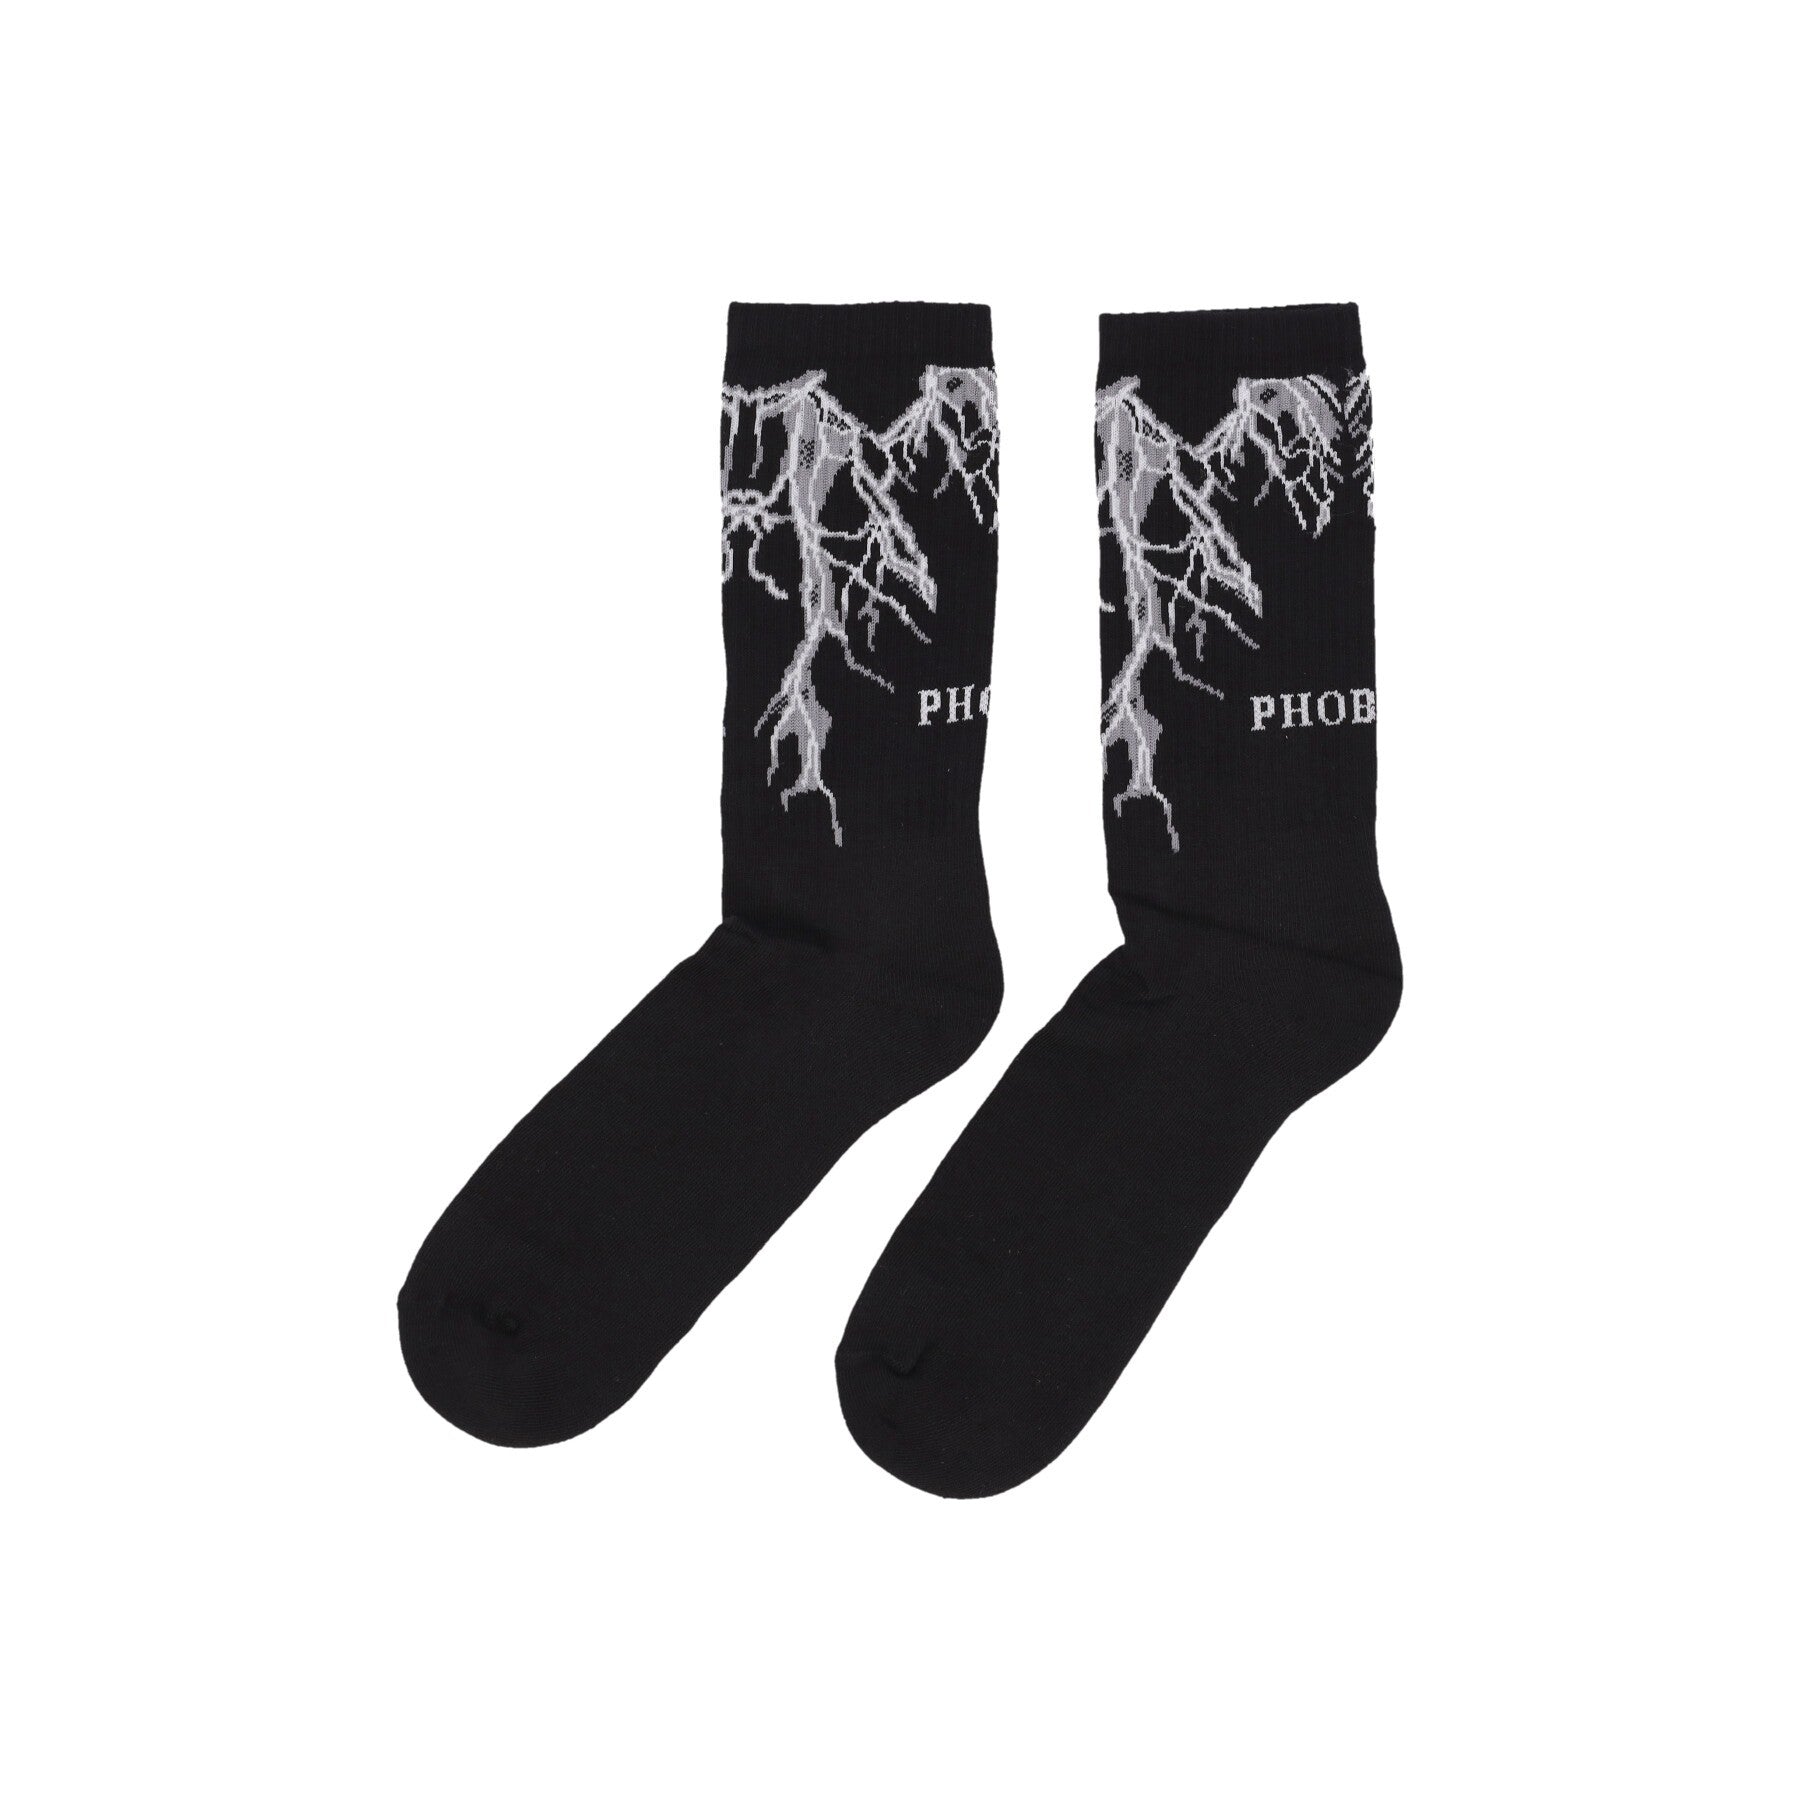 Phobia, Calza Media Uomo Lightning Socks, Black/grey